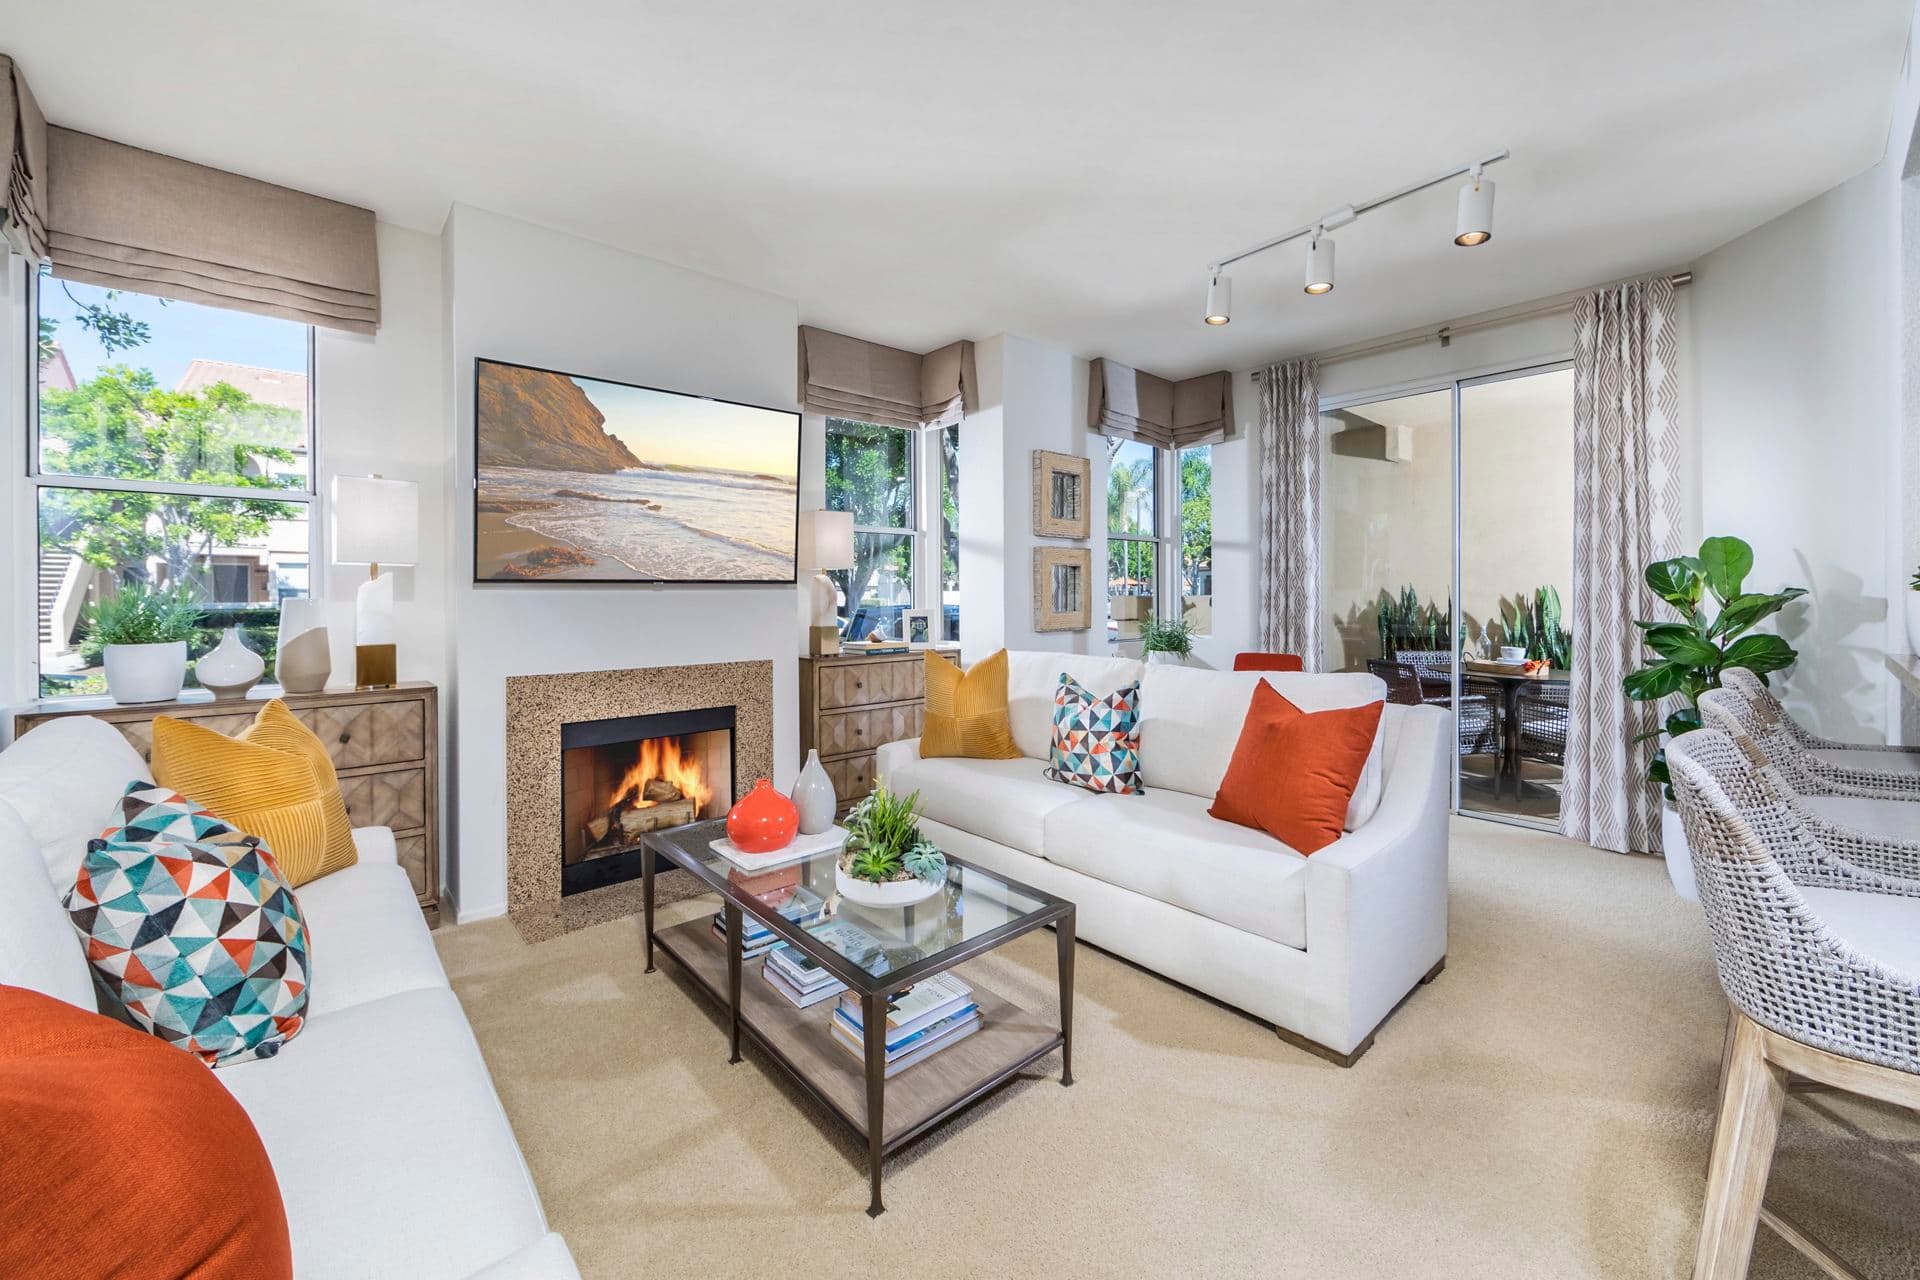 Interior view of living room at San Carlo Villa Apartment Homes in Irvine, CA.